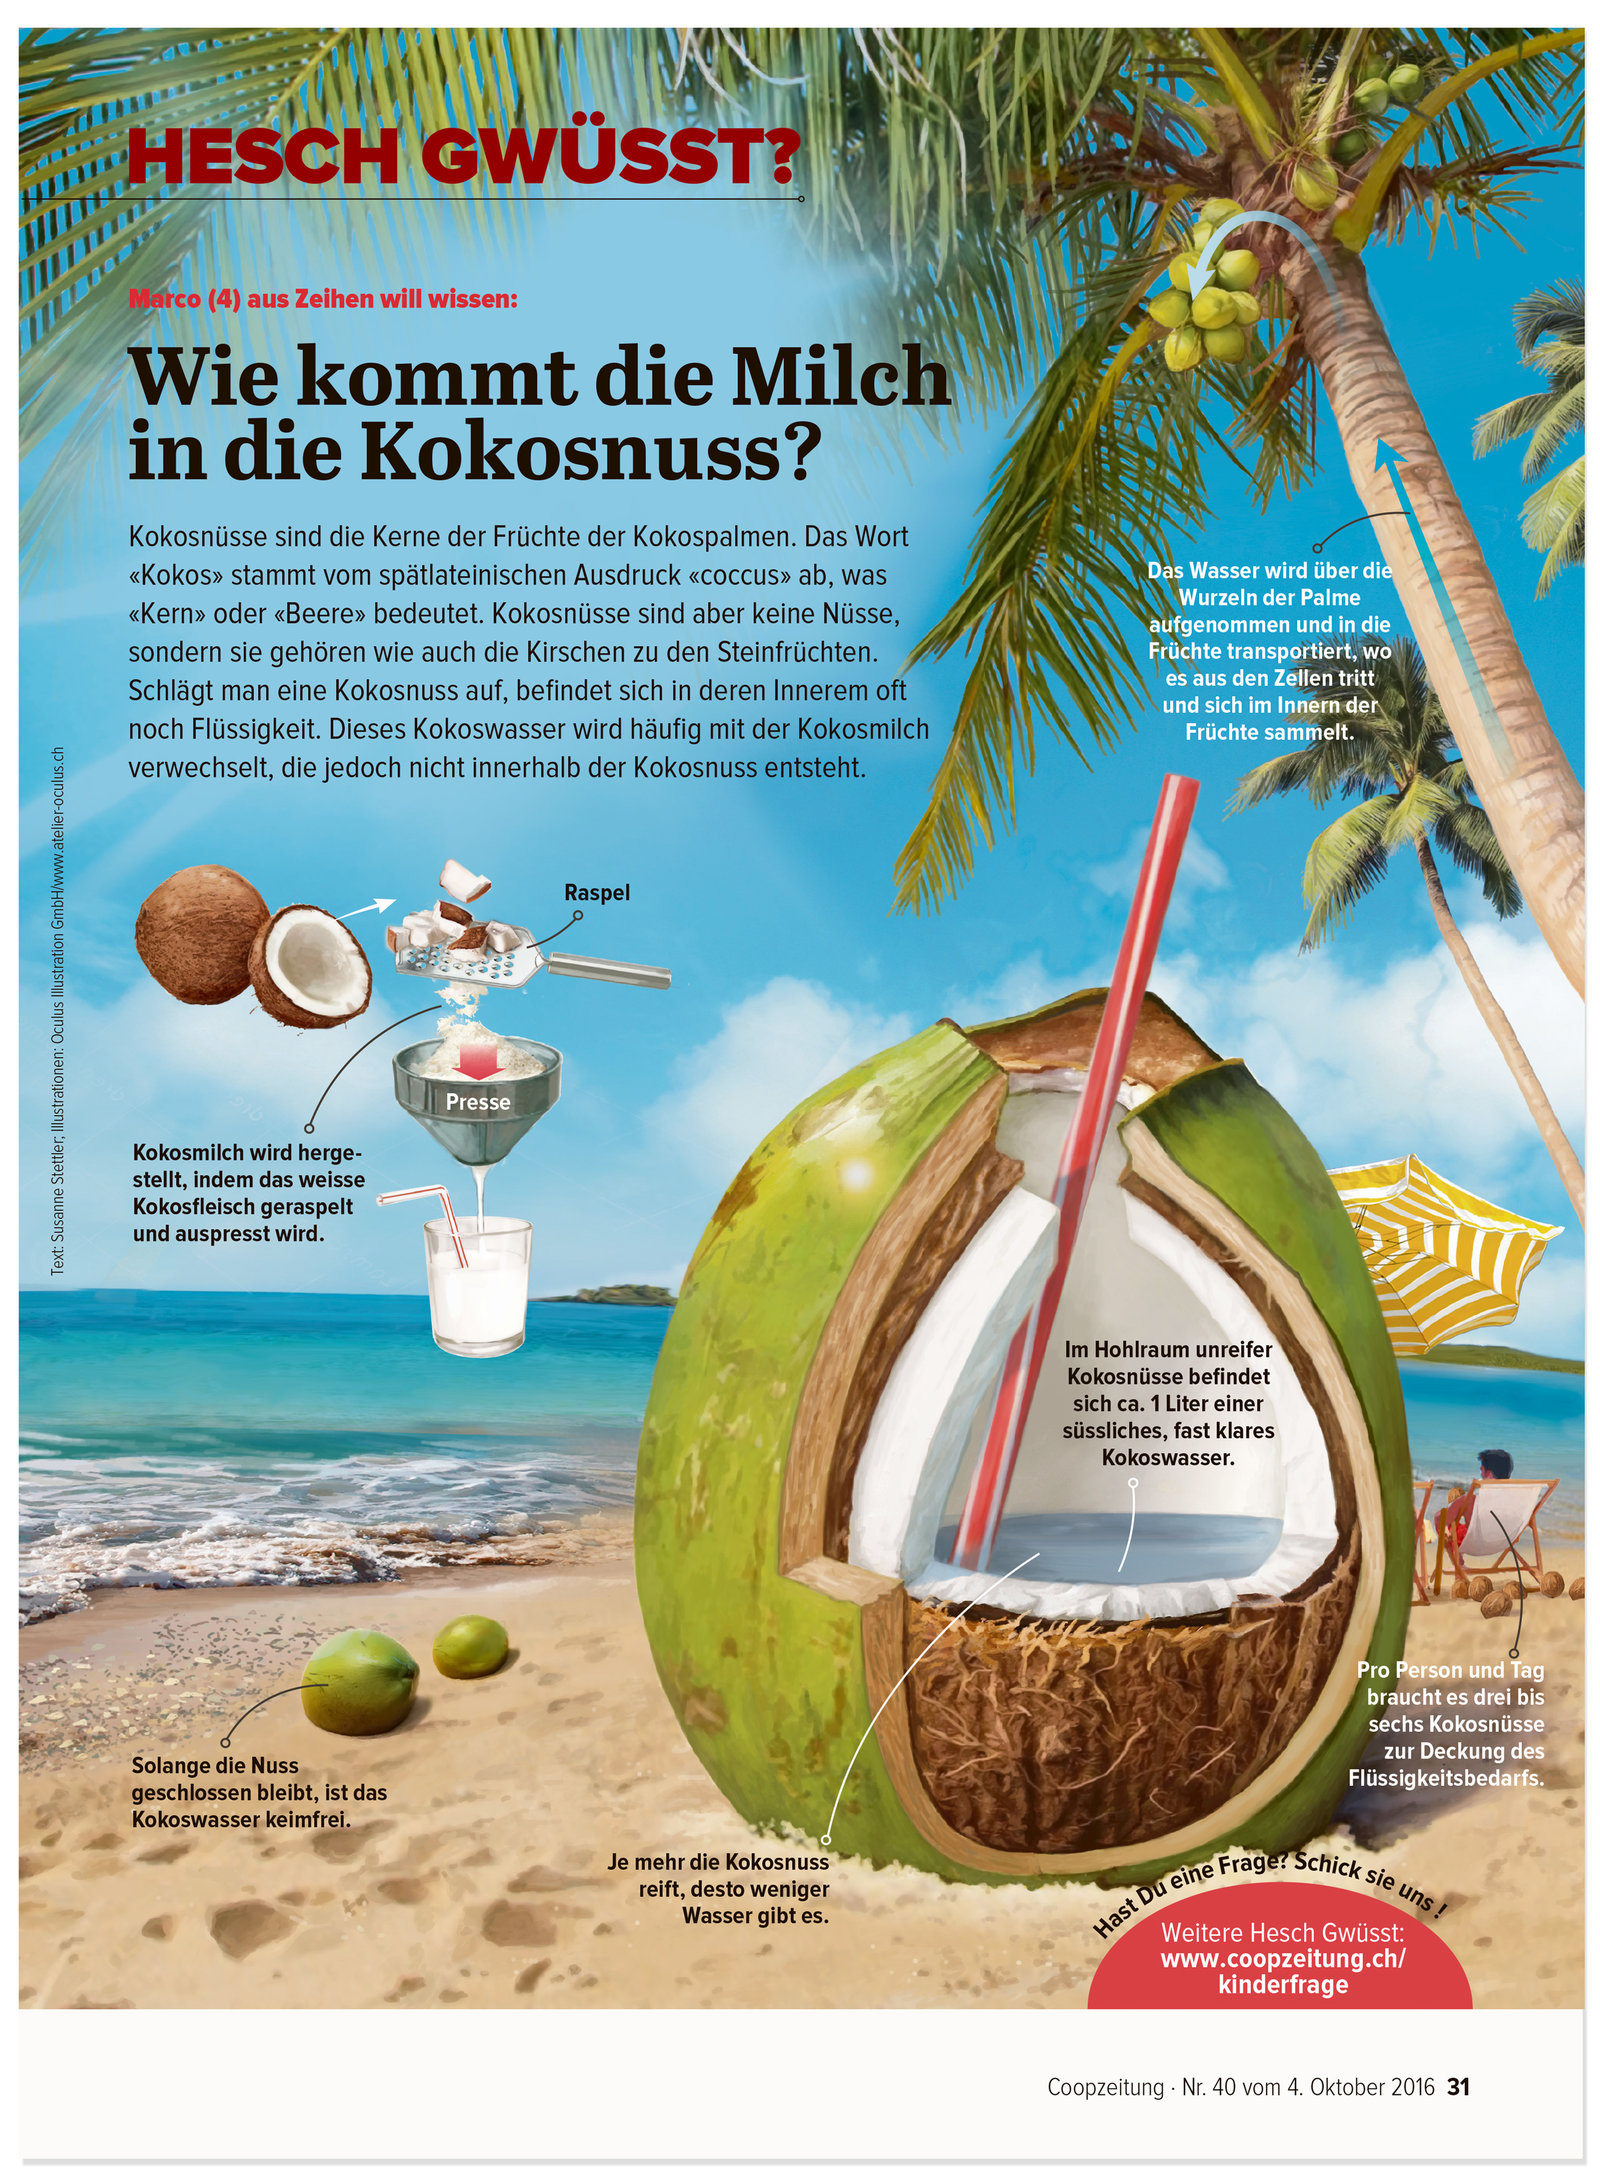 oculus-illustration-coopzeitung-hesch-gwuesst-kokosnuss